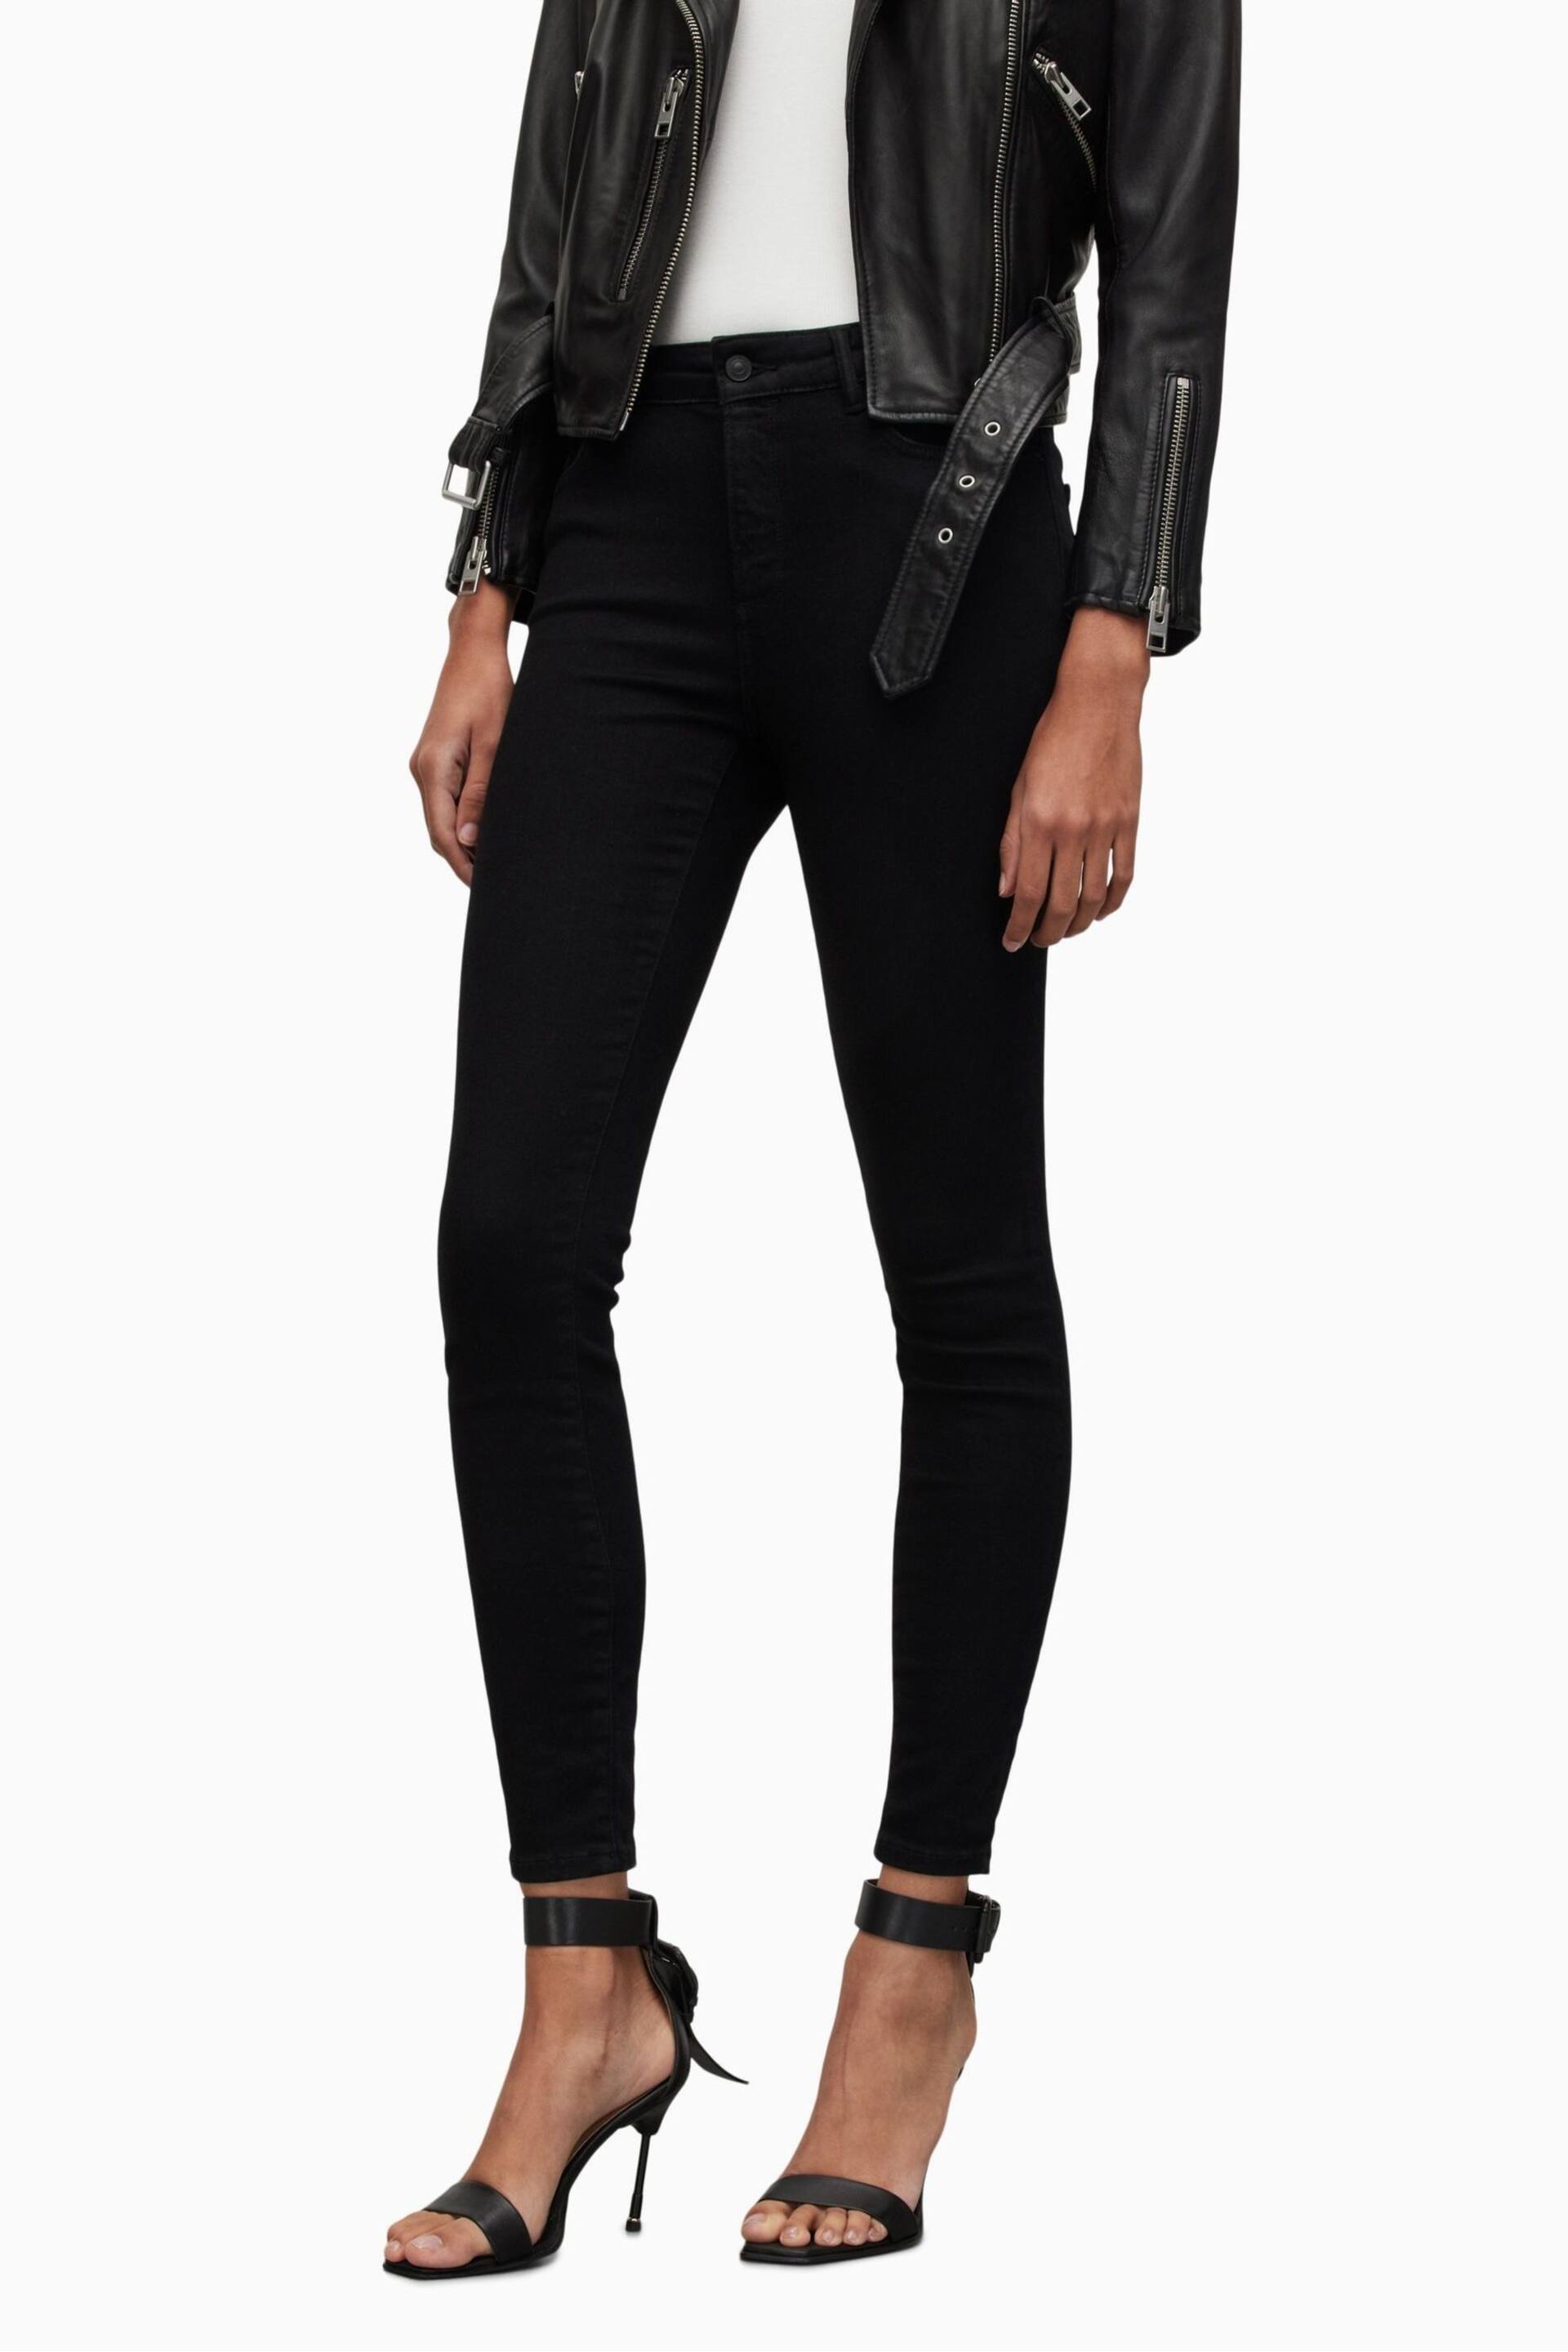 AllSaints Black Miller Sizeme Jeans - Image 5 of 8